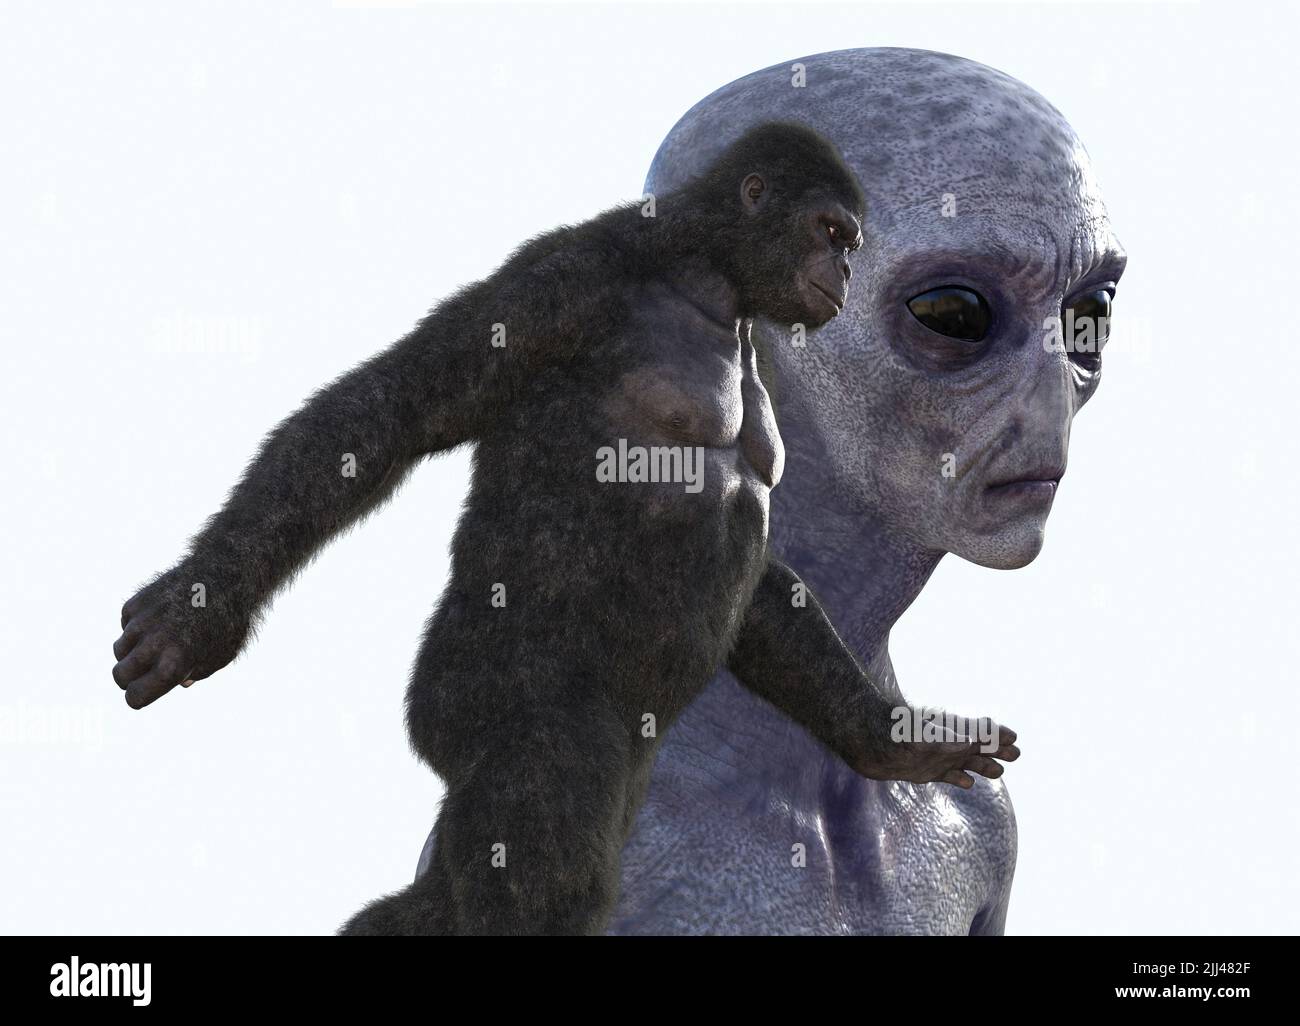 Ape and alien, illustration. Stock Photo